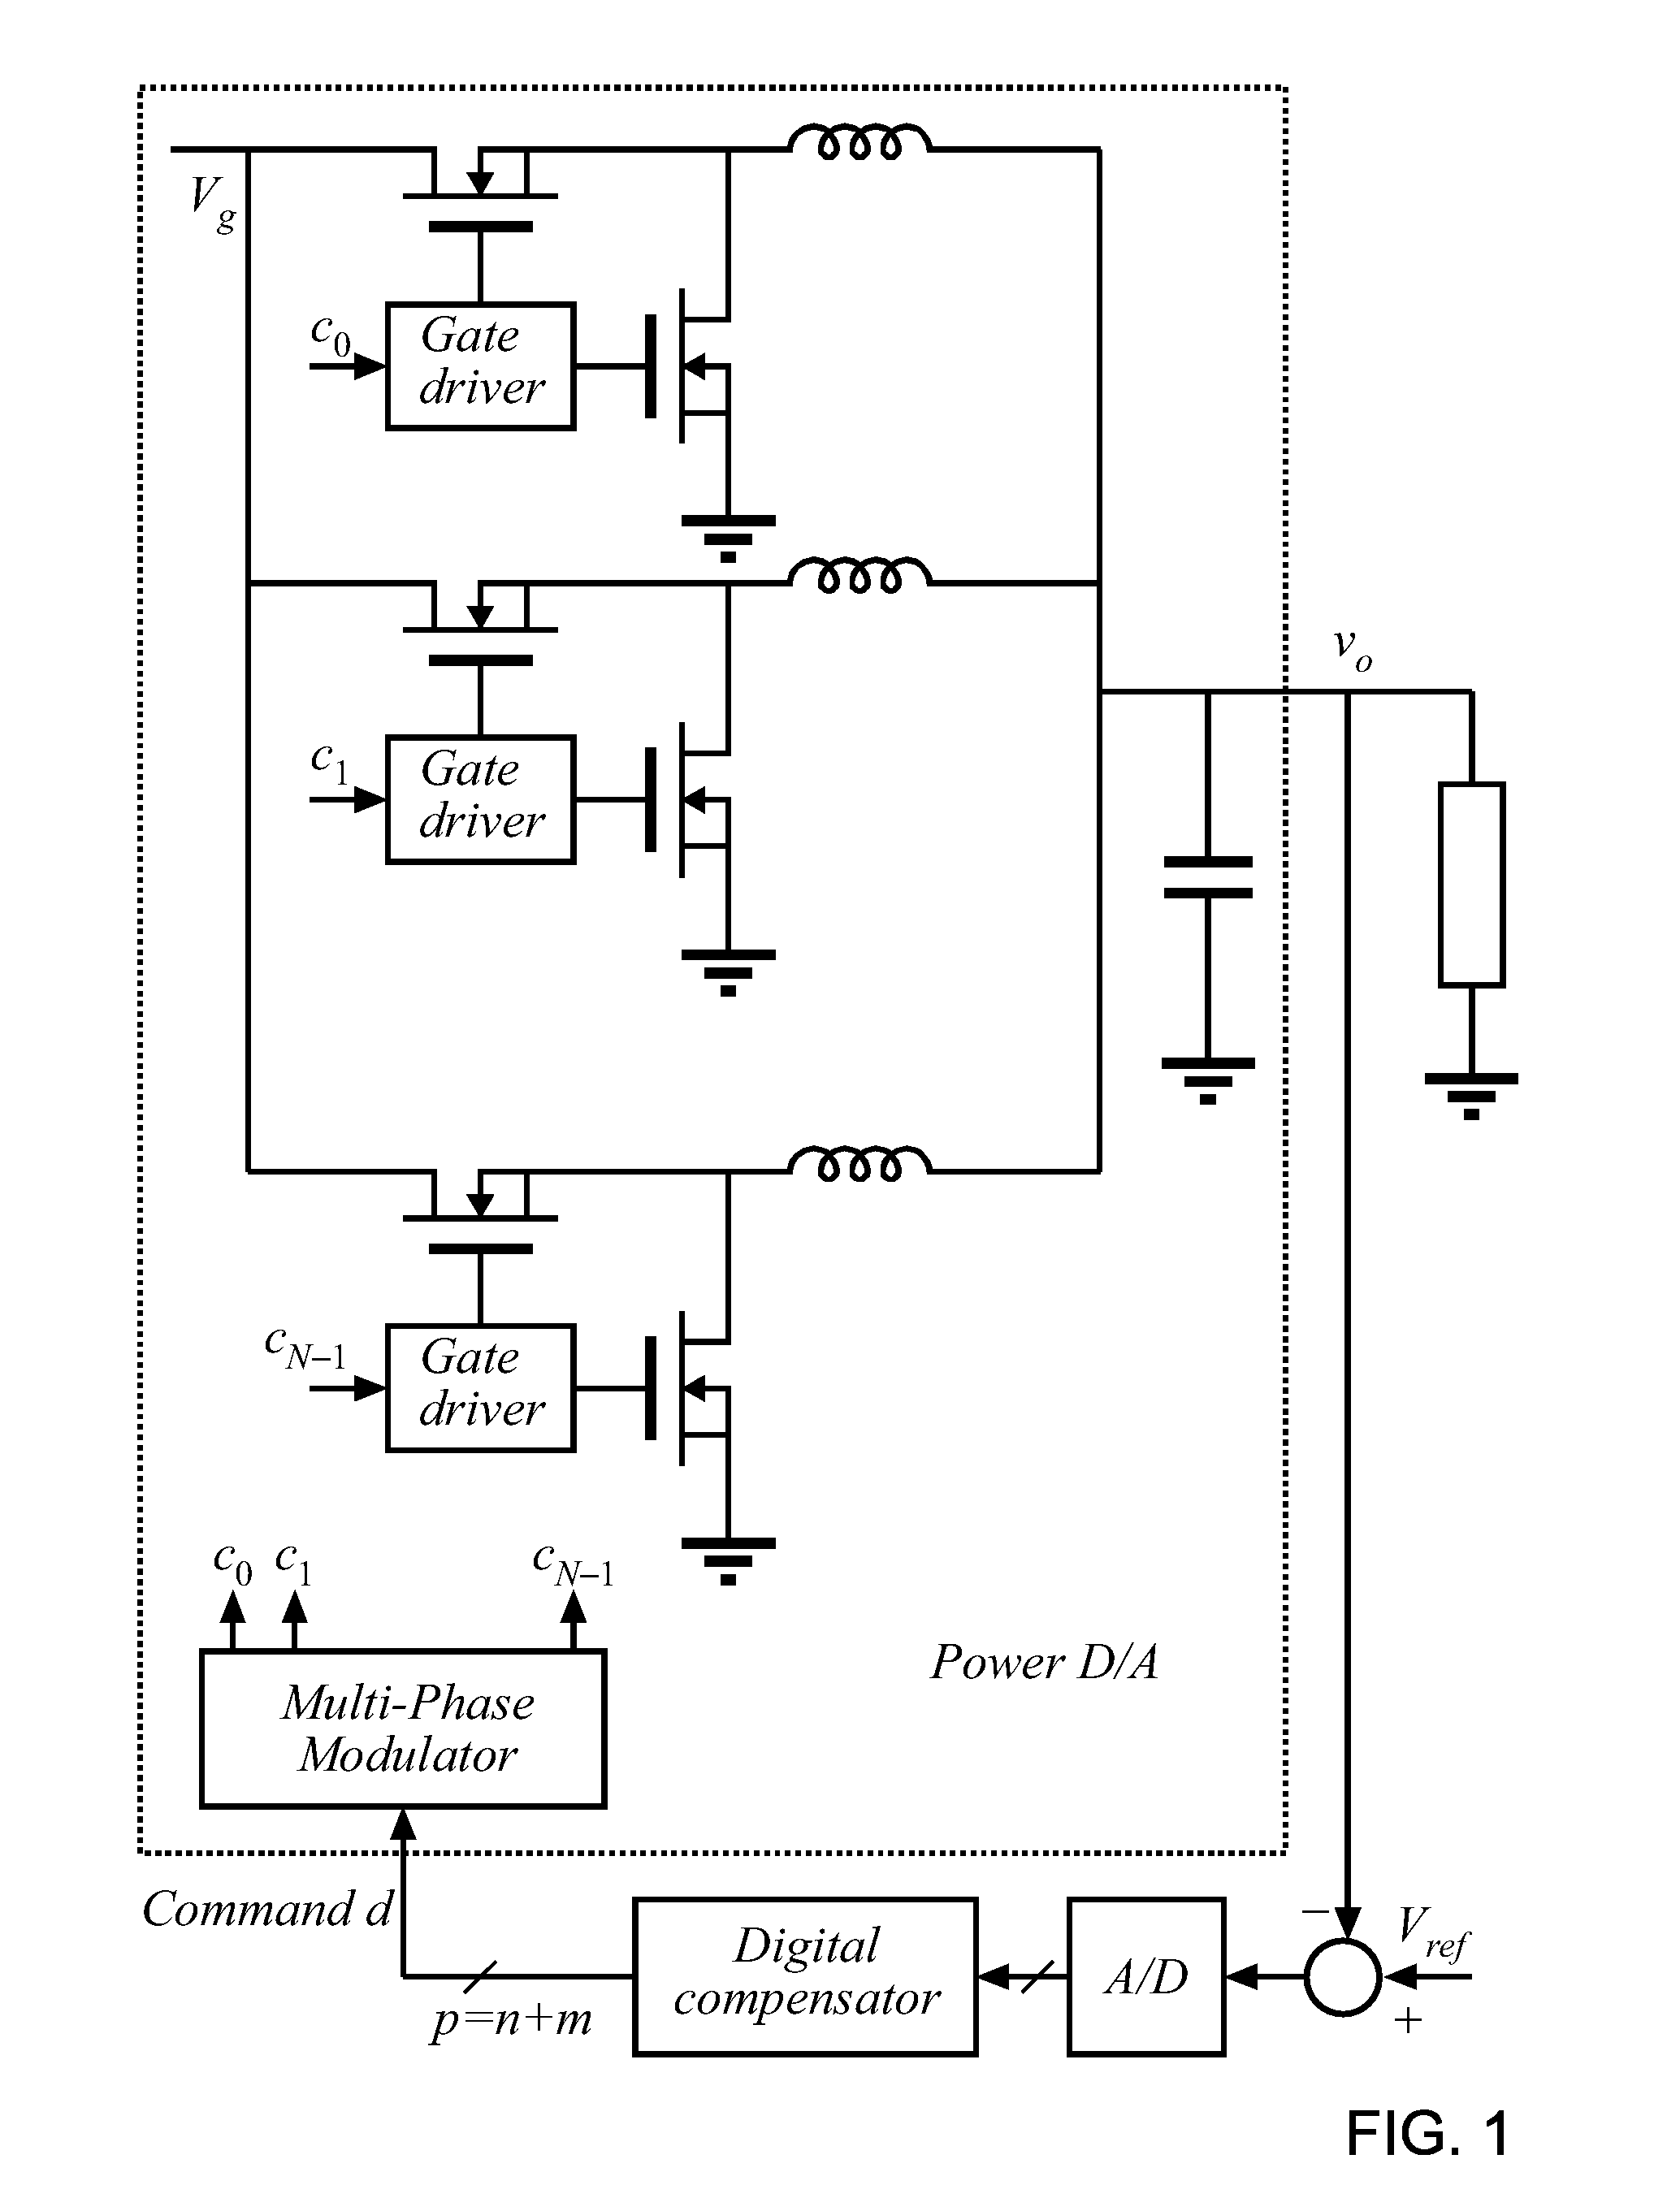 Multi-phase modulator